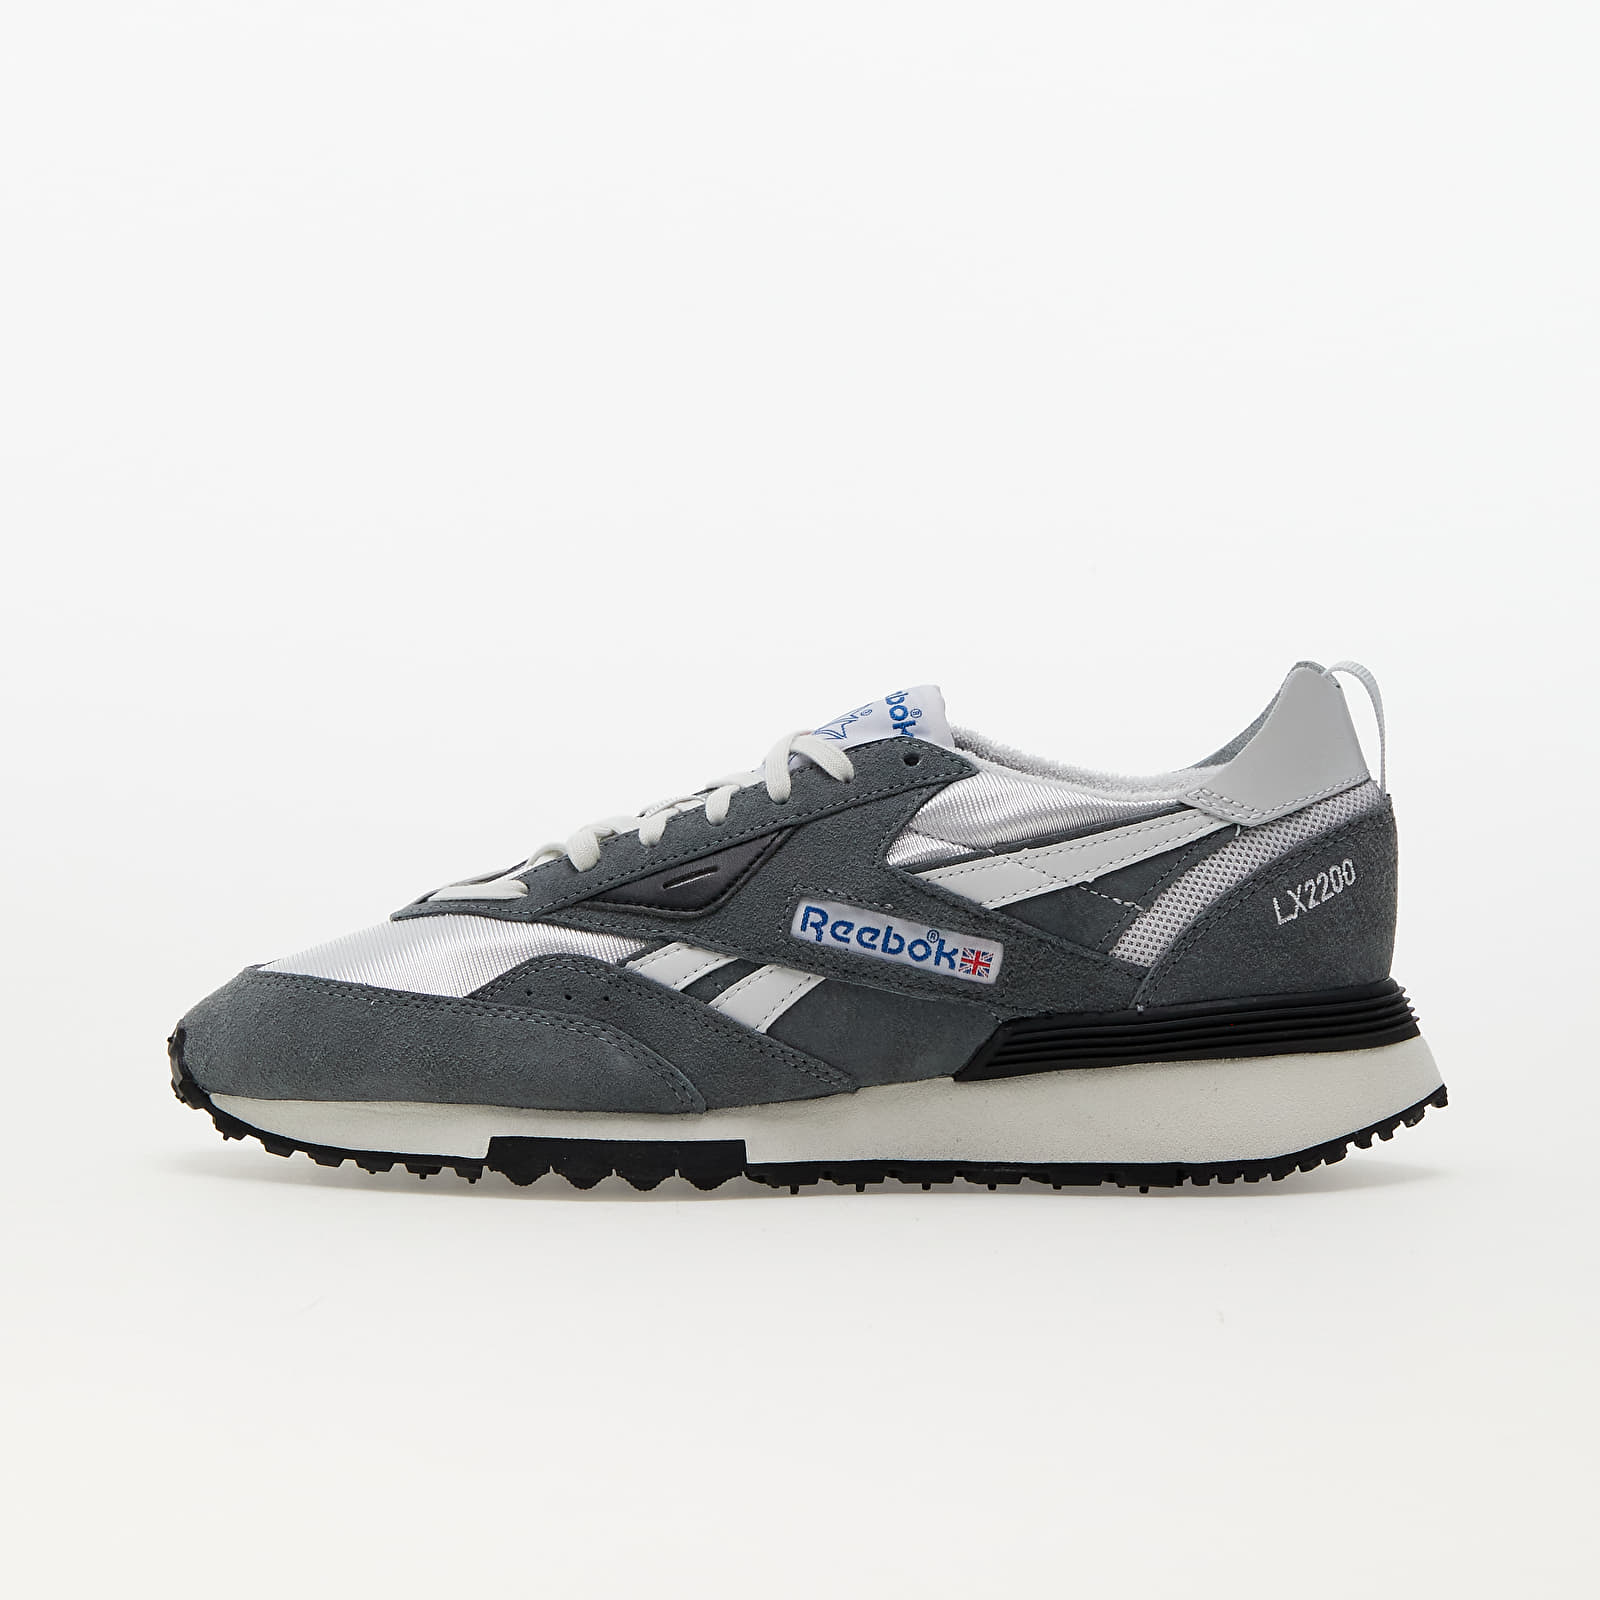 Men's shoes Reebok LX2200 Cold Grey 6/ Cold Grey/ Core Black